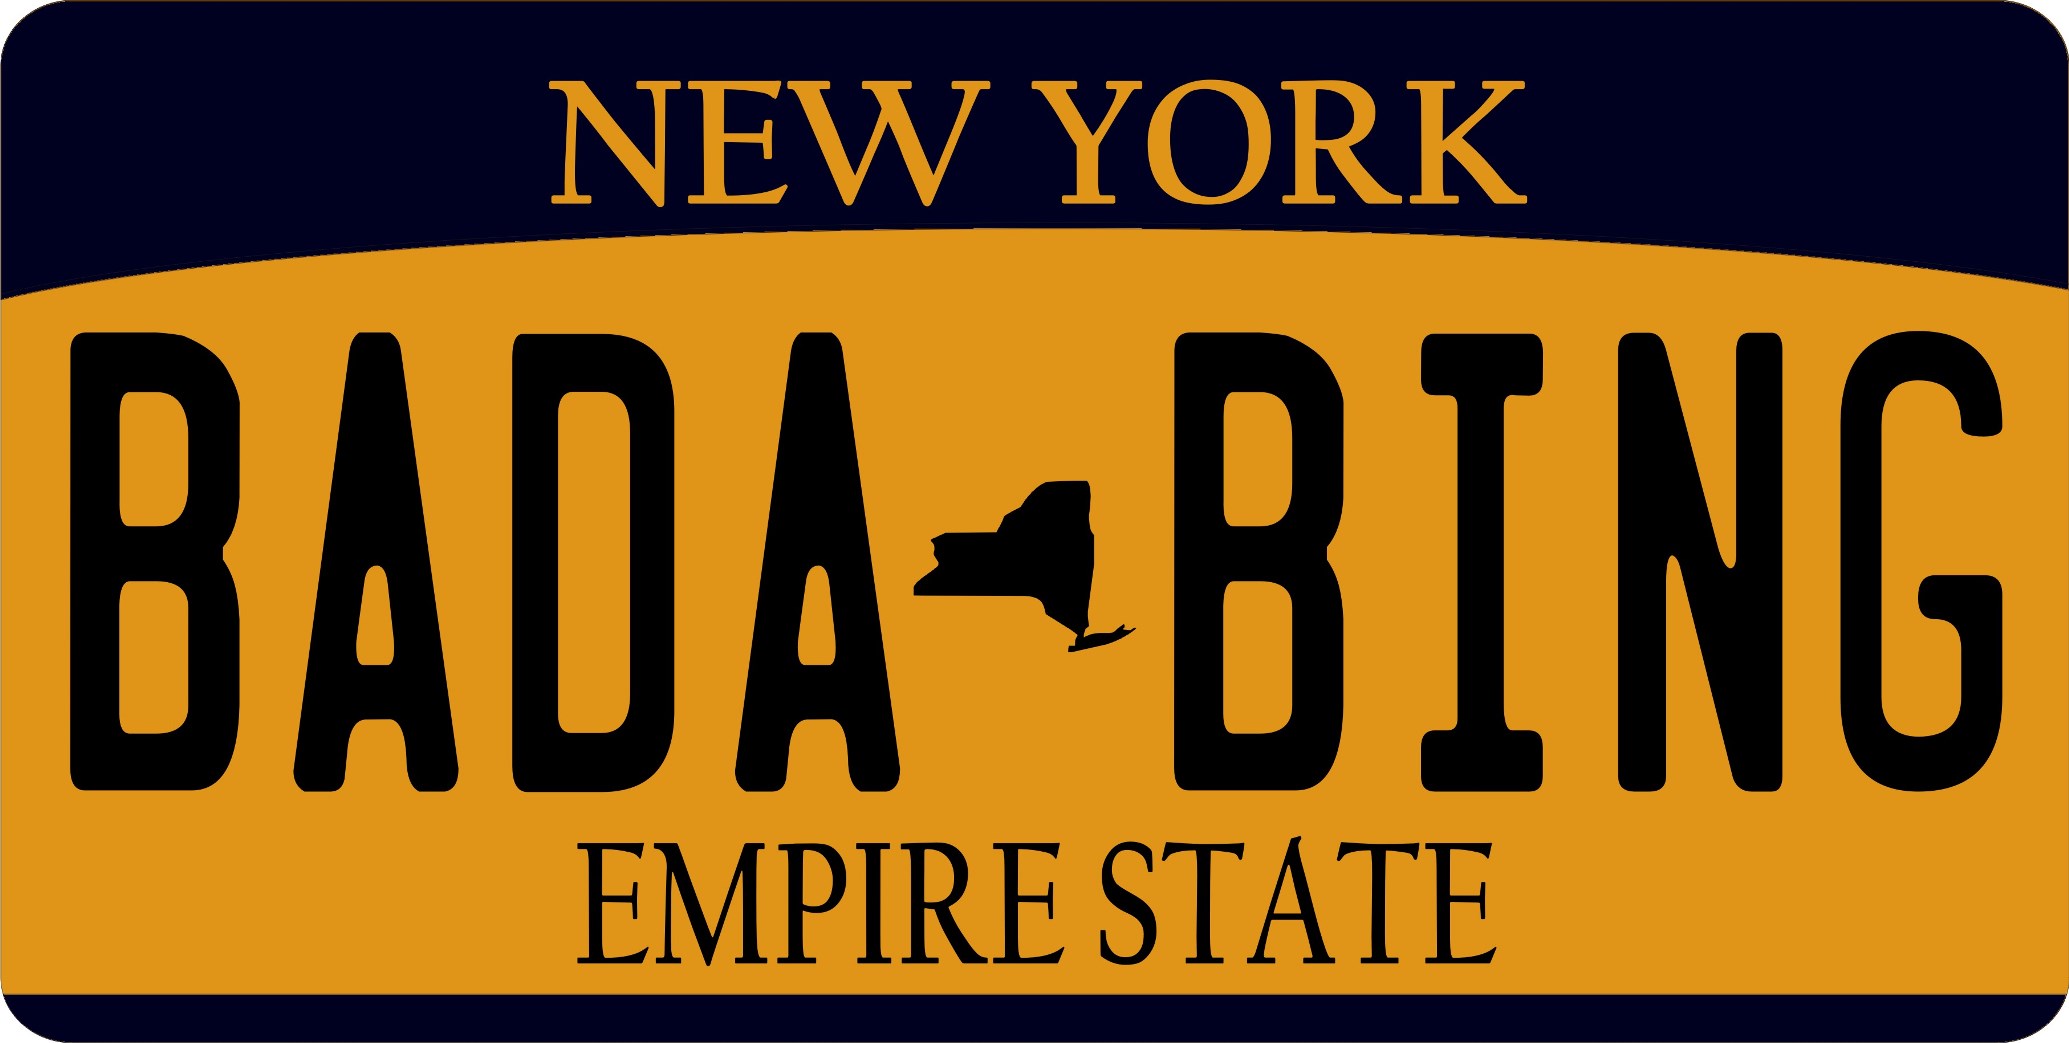 NEW York Bada Bing Photo License Plate